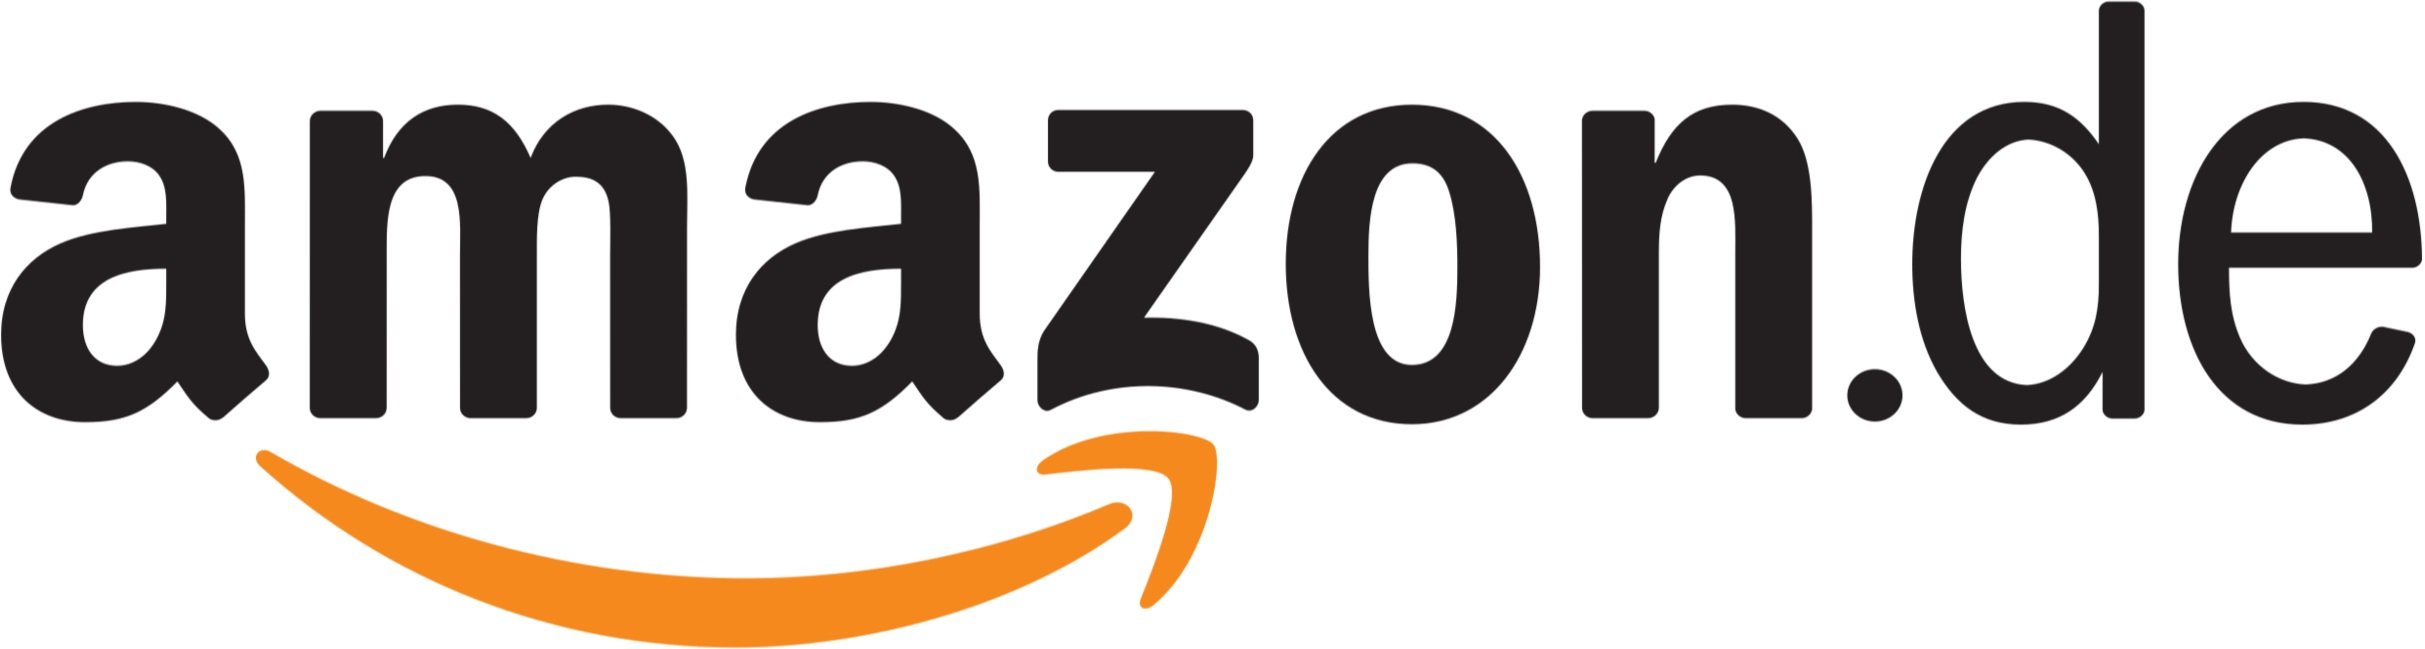 2560px-Amazon.de-Logo.jpg